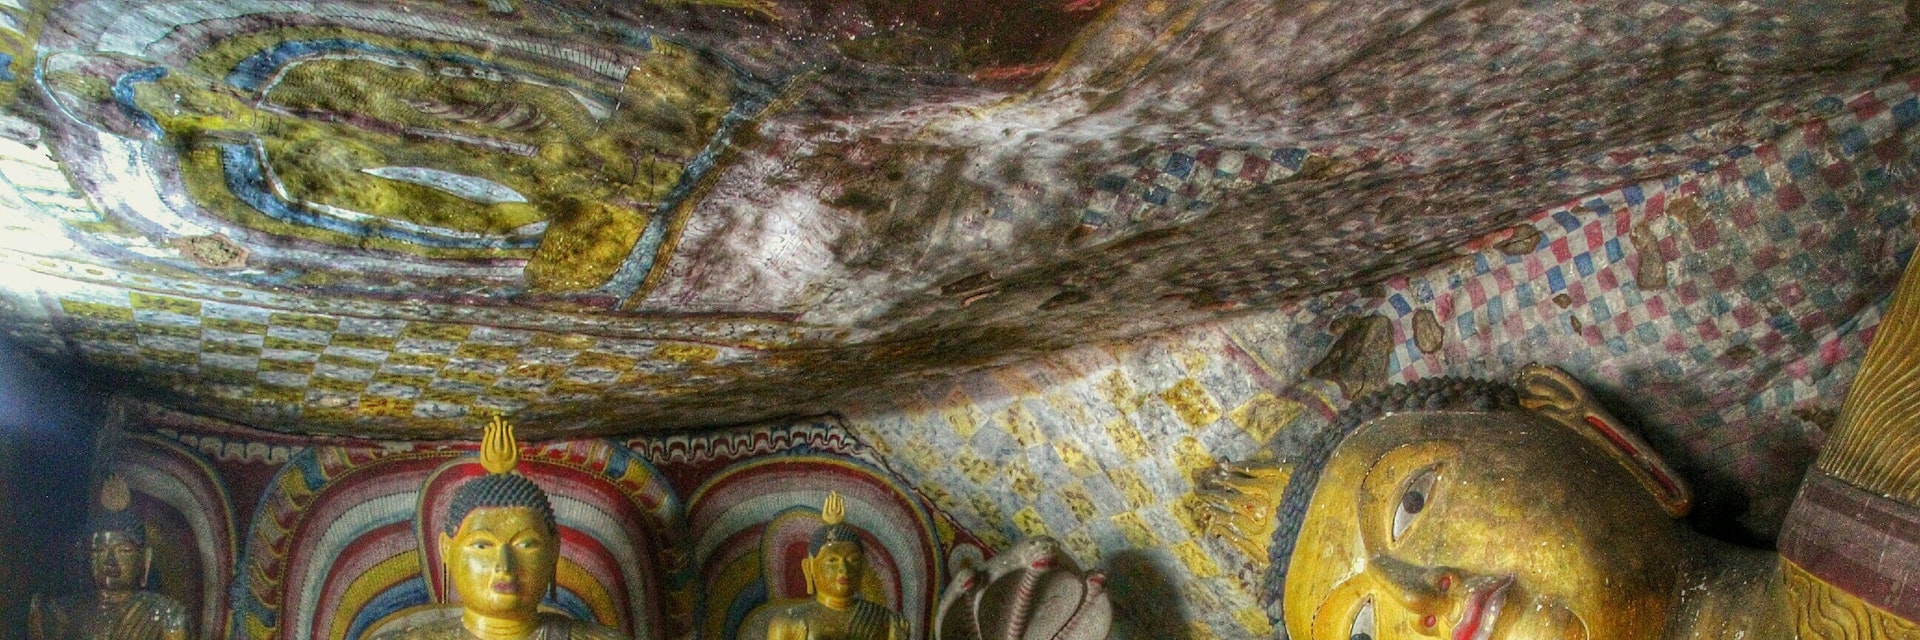 Reclining Buddha Statue At Dambulla Cave Temple